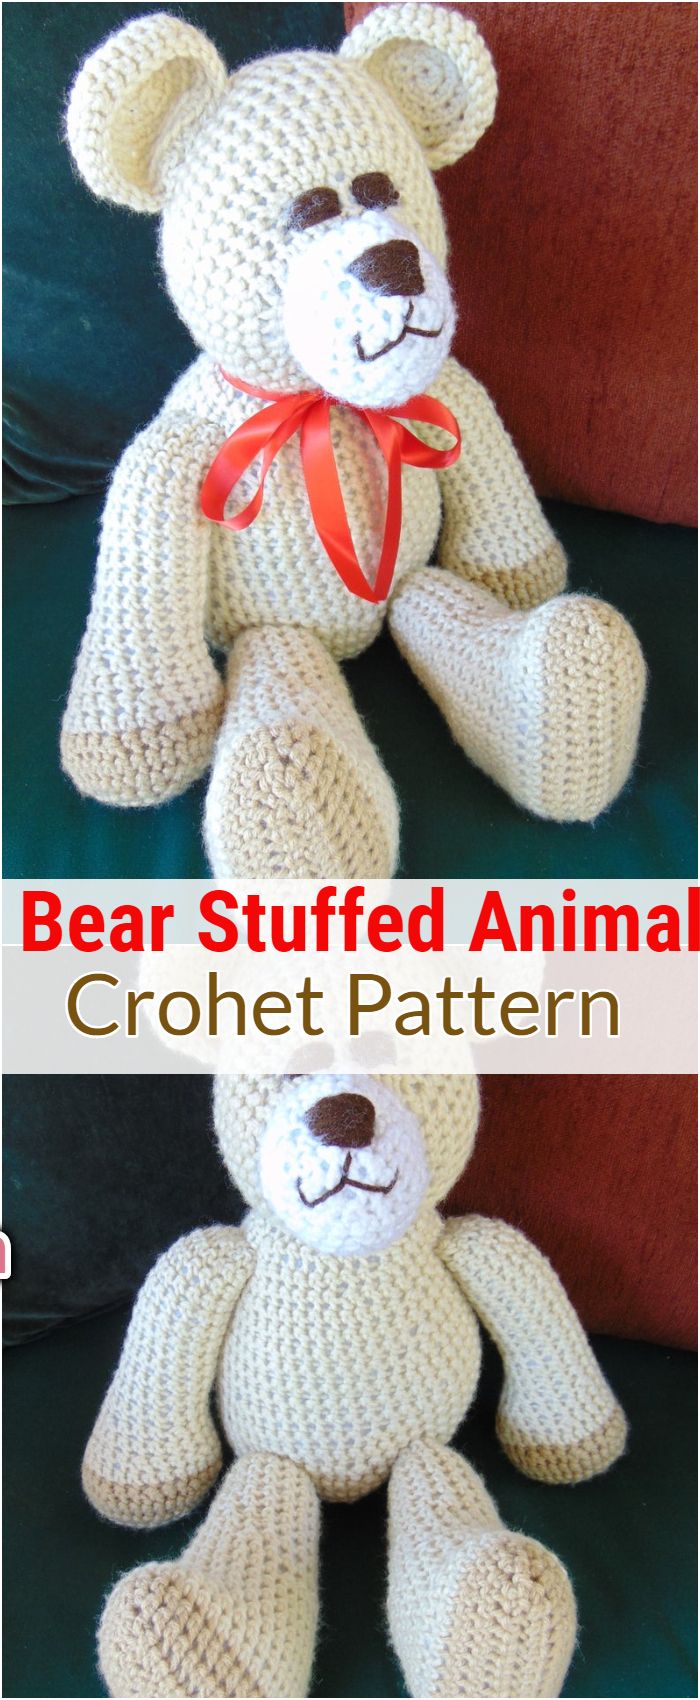 Crocheted Teddy Bear Stuffed Animal